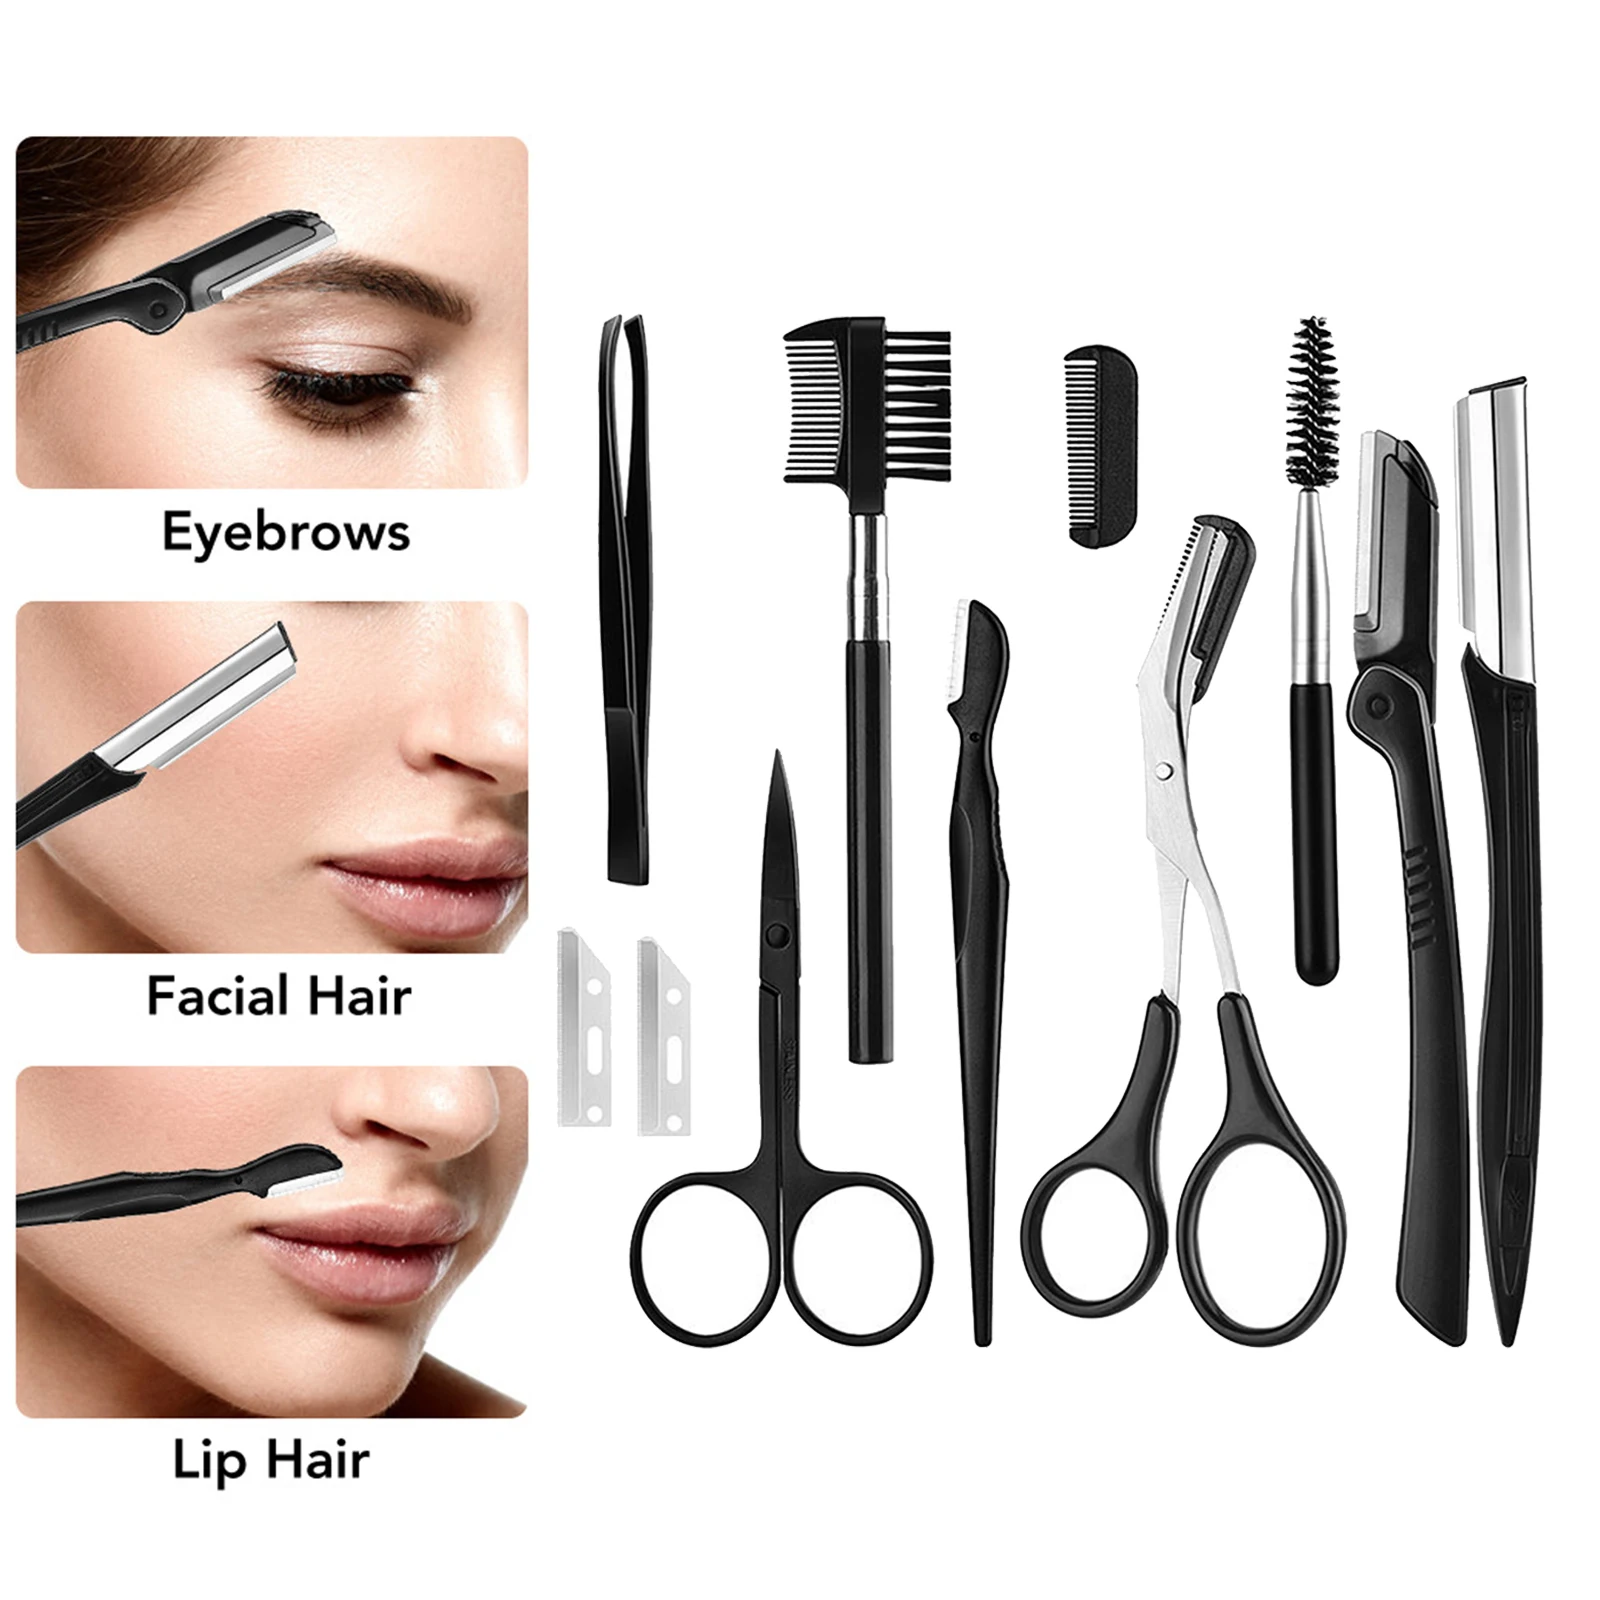 Eyebrow Razor, 11 in 1 Eyebrow Kit, Professional Eyebrow Grooming Set, Eyebrow Trimmers Set for Women and Men